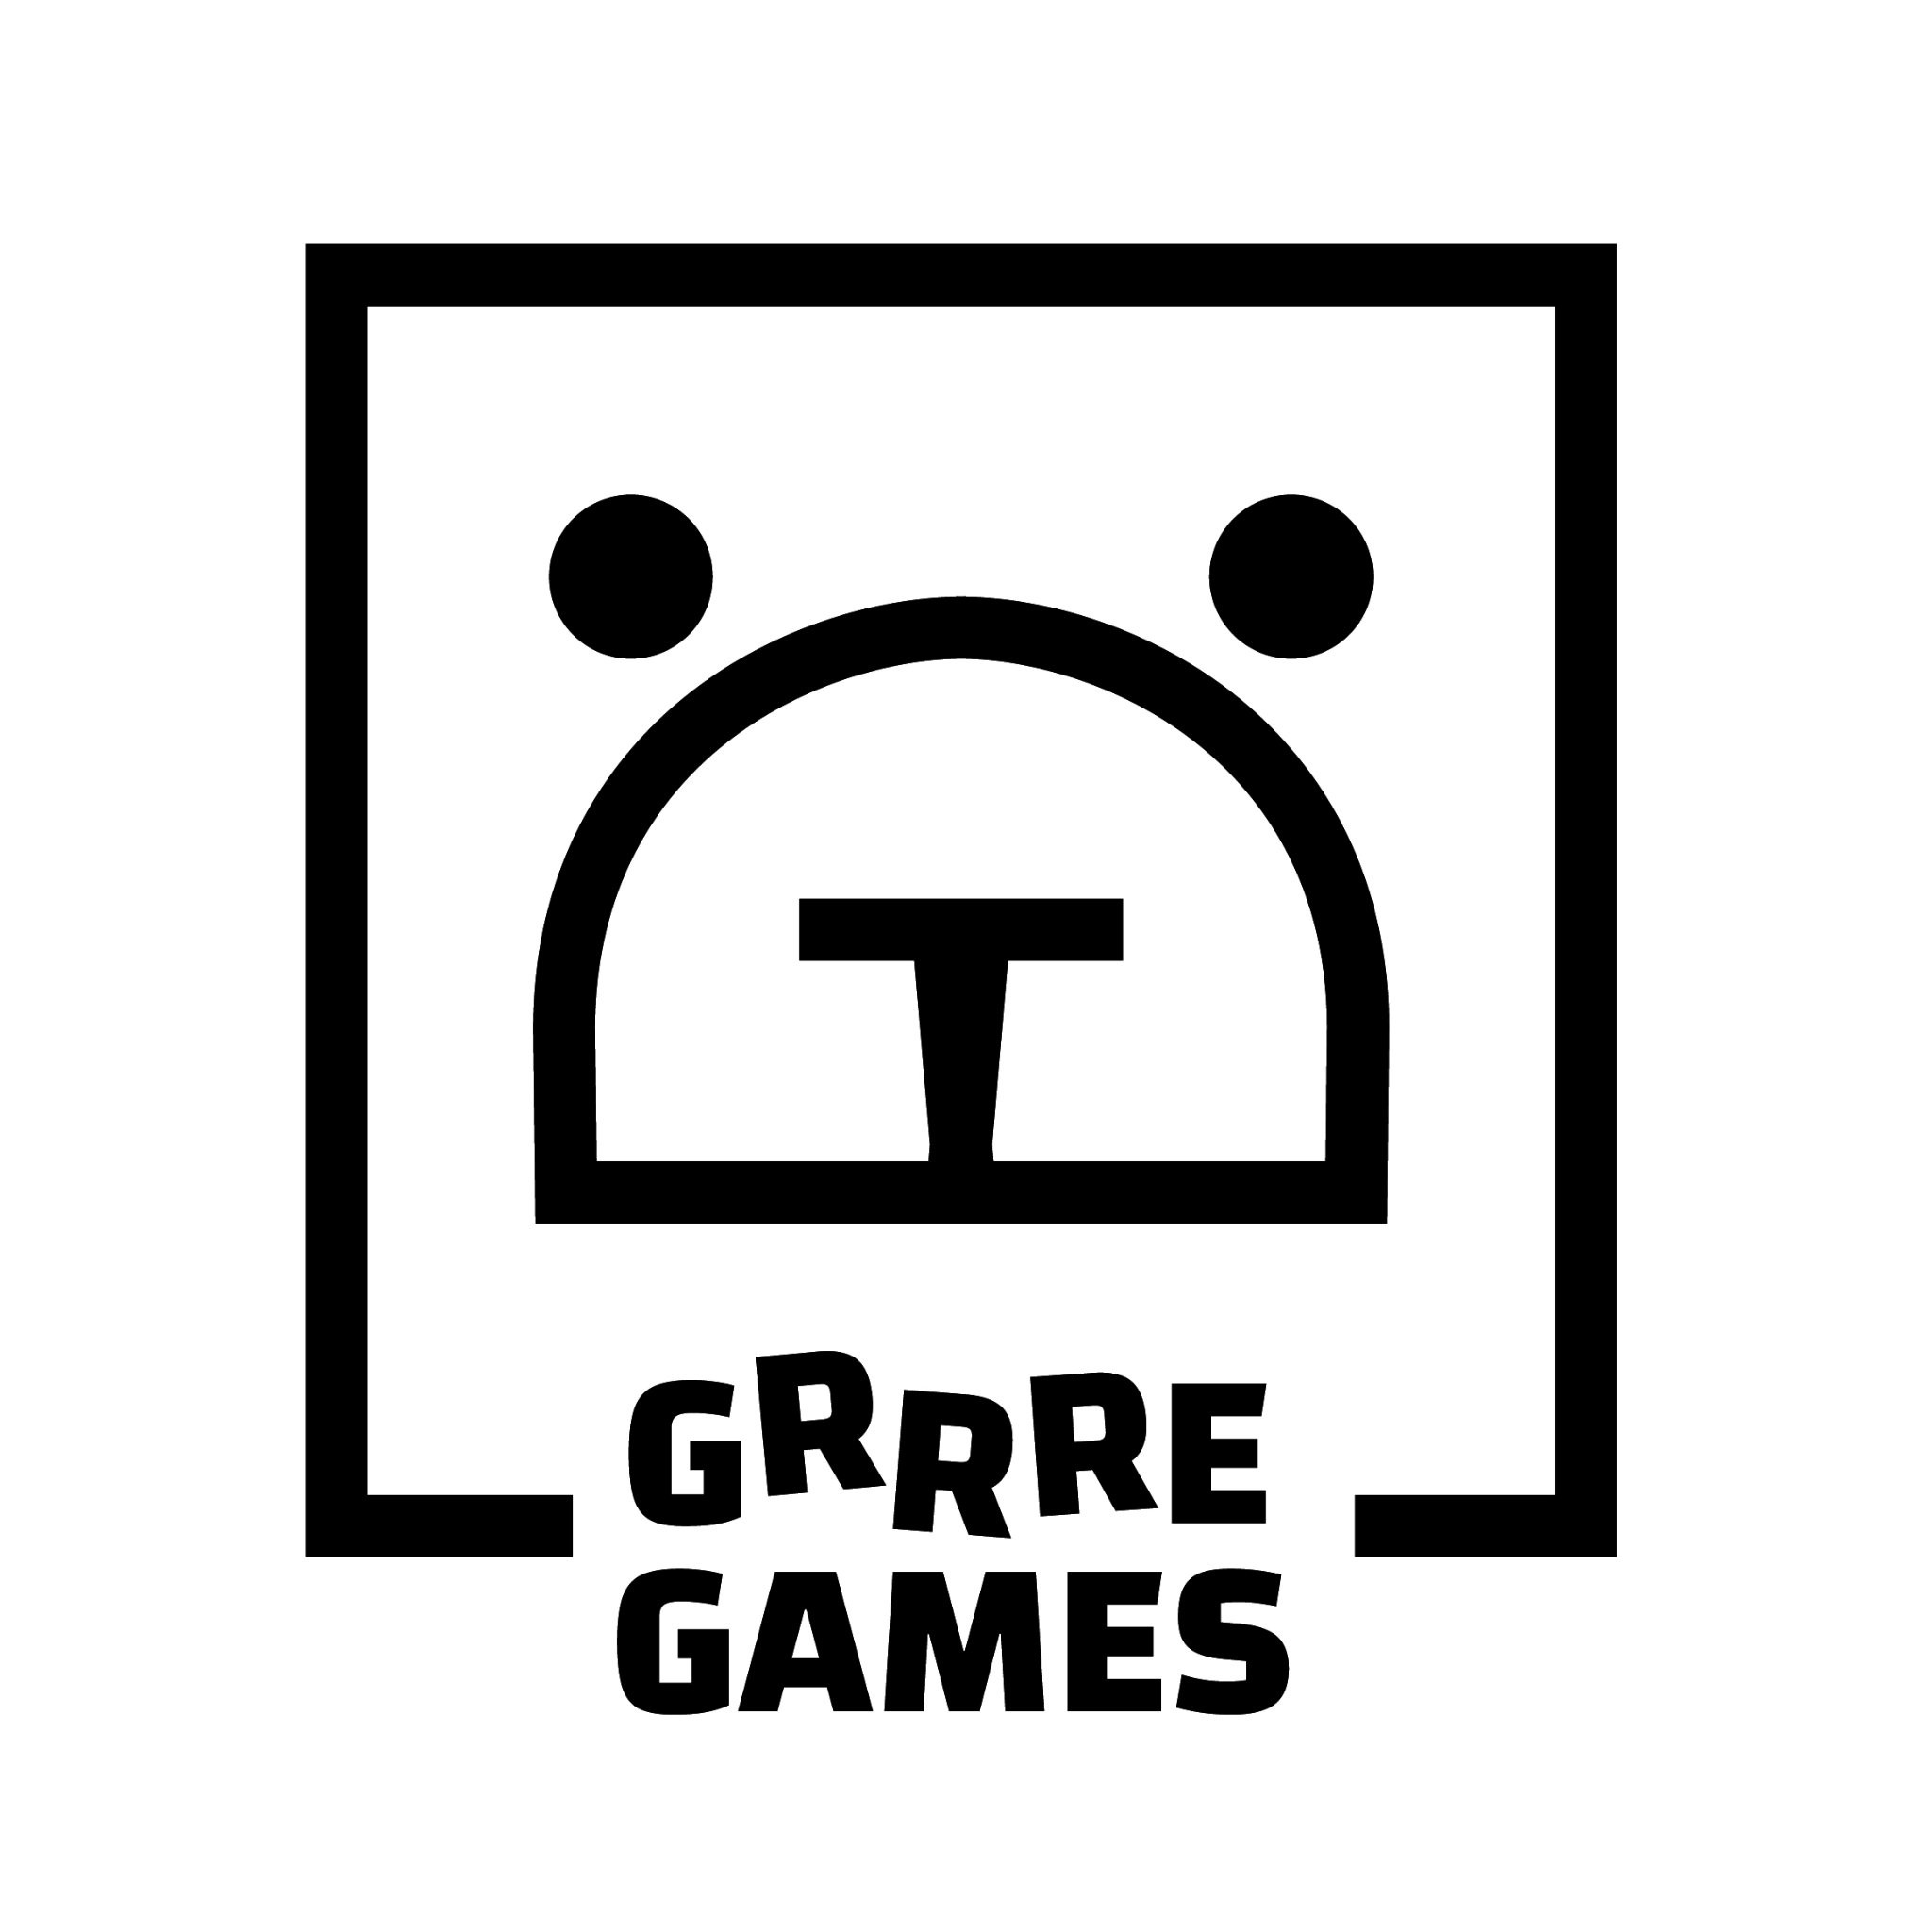 GRRRE Games